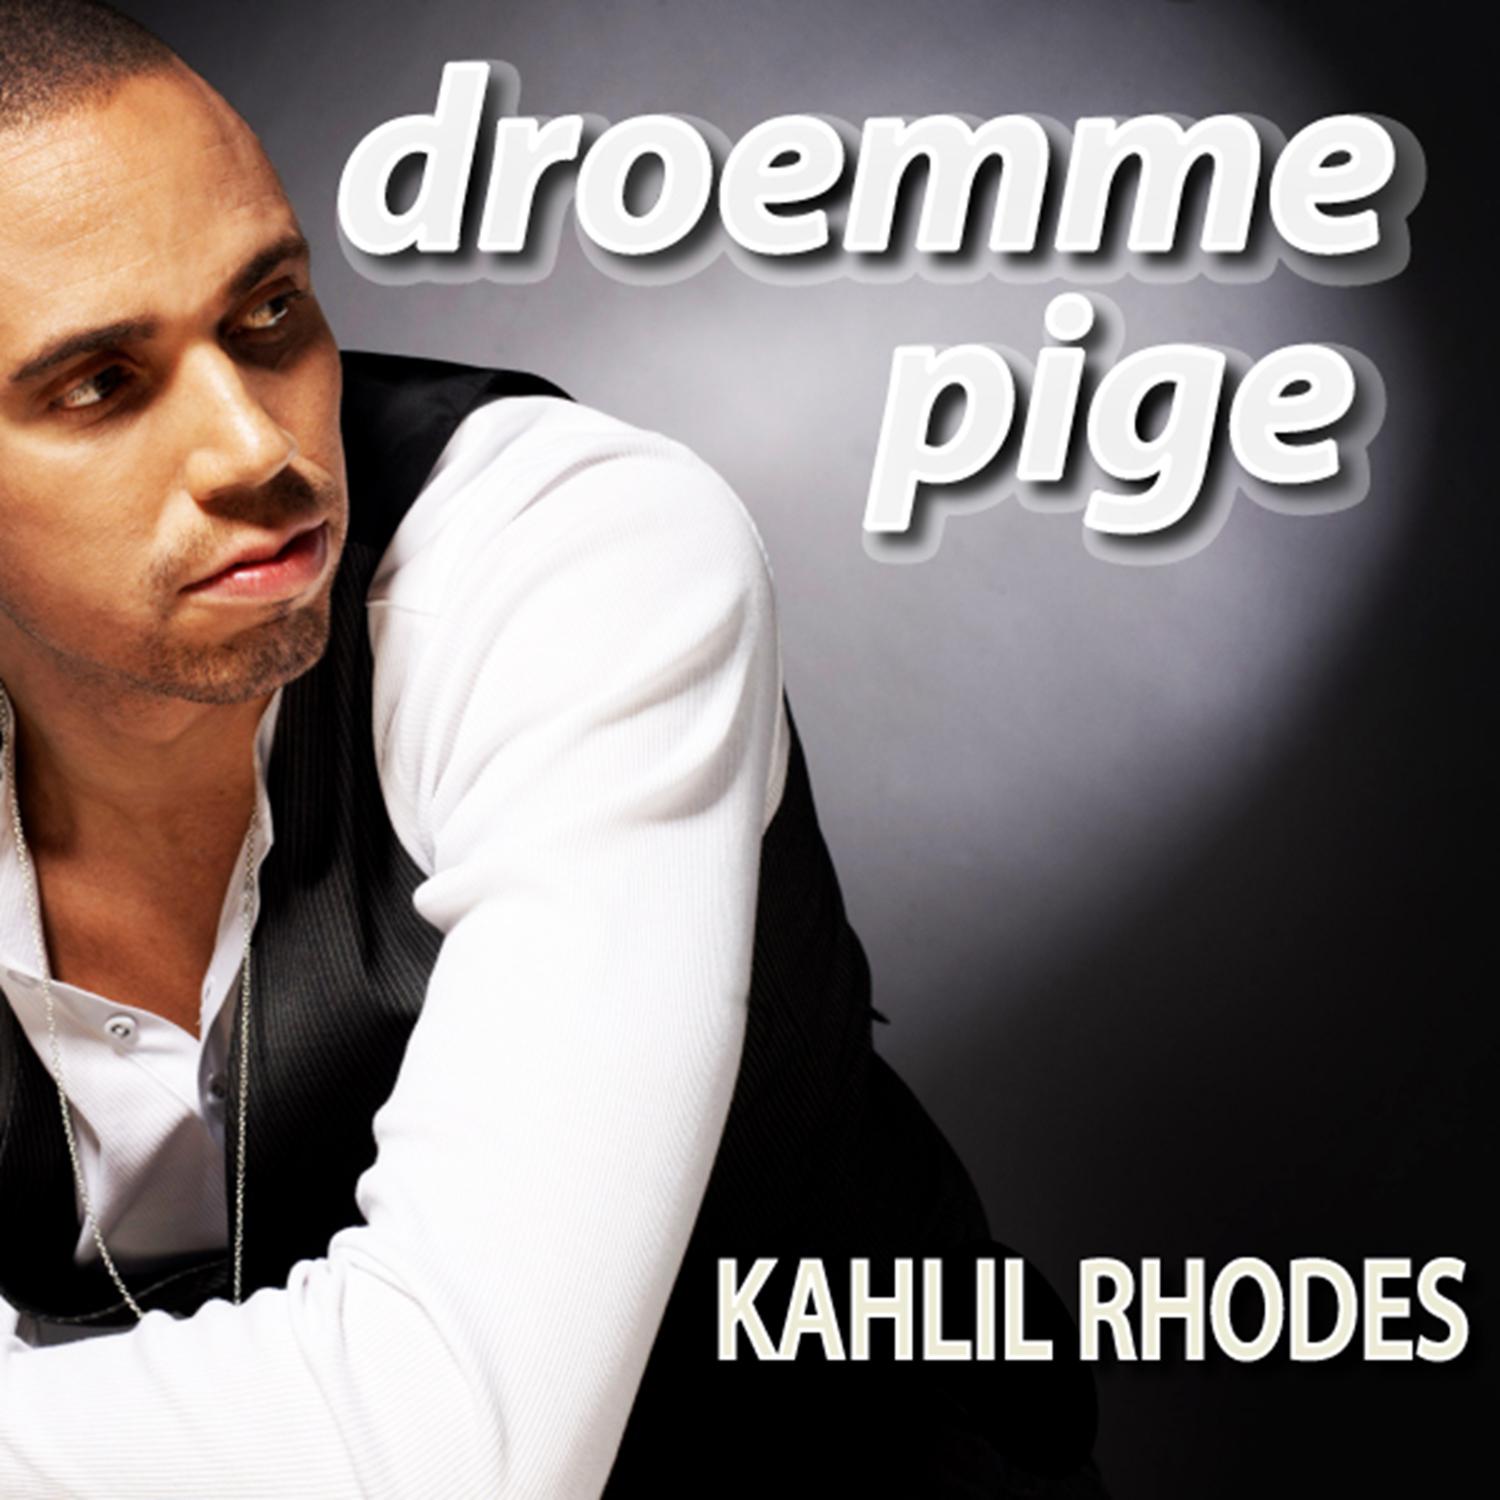 Droemmepige歌词 歌手Kahlil Rhodes-专辑Droemmepige-单曲《Droemmepige》LRC歌词下载